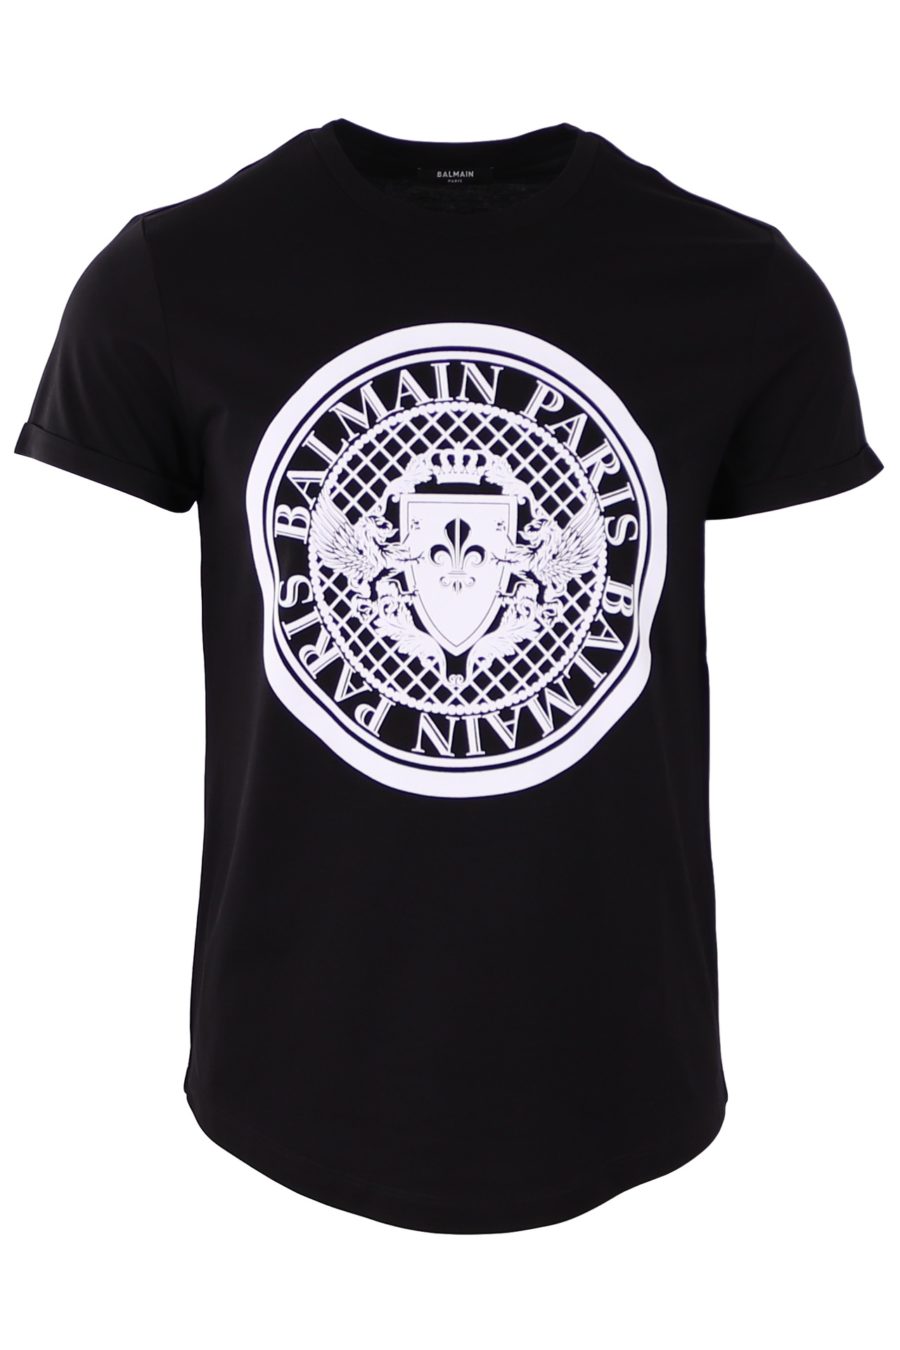 T-shirt Balmain velours noir logo rond - ec399fb198d4124f15e09dcb309de15acaf1baf7